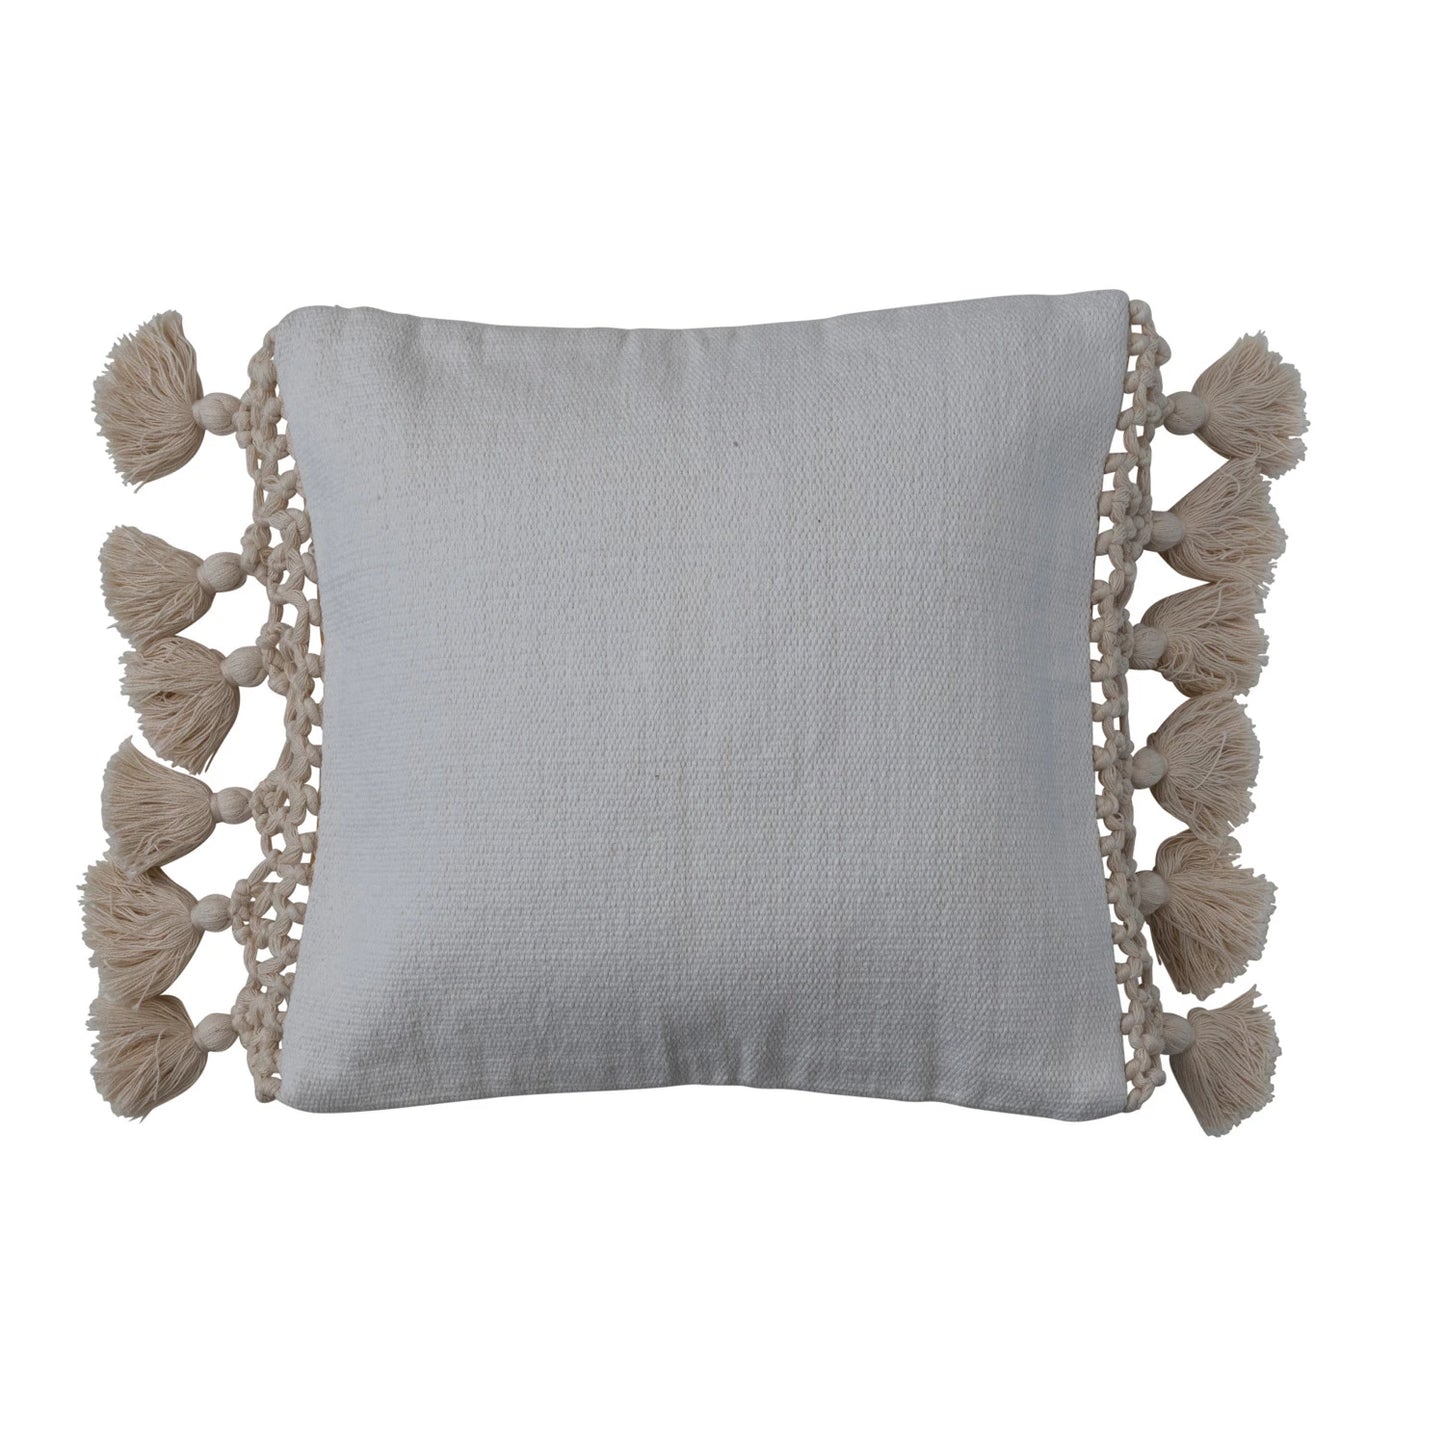 Hand-Woven Cotton & Wool Pillow w/ Embroidery, Crochet & Tassels